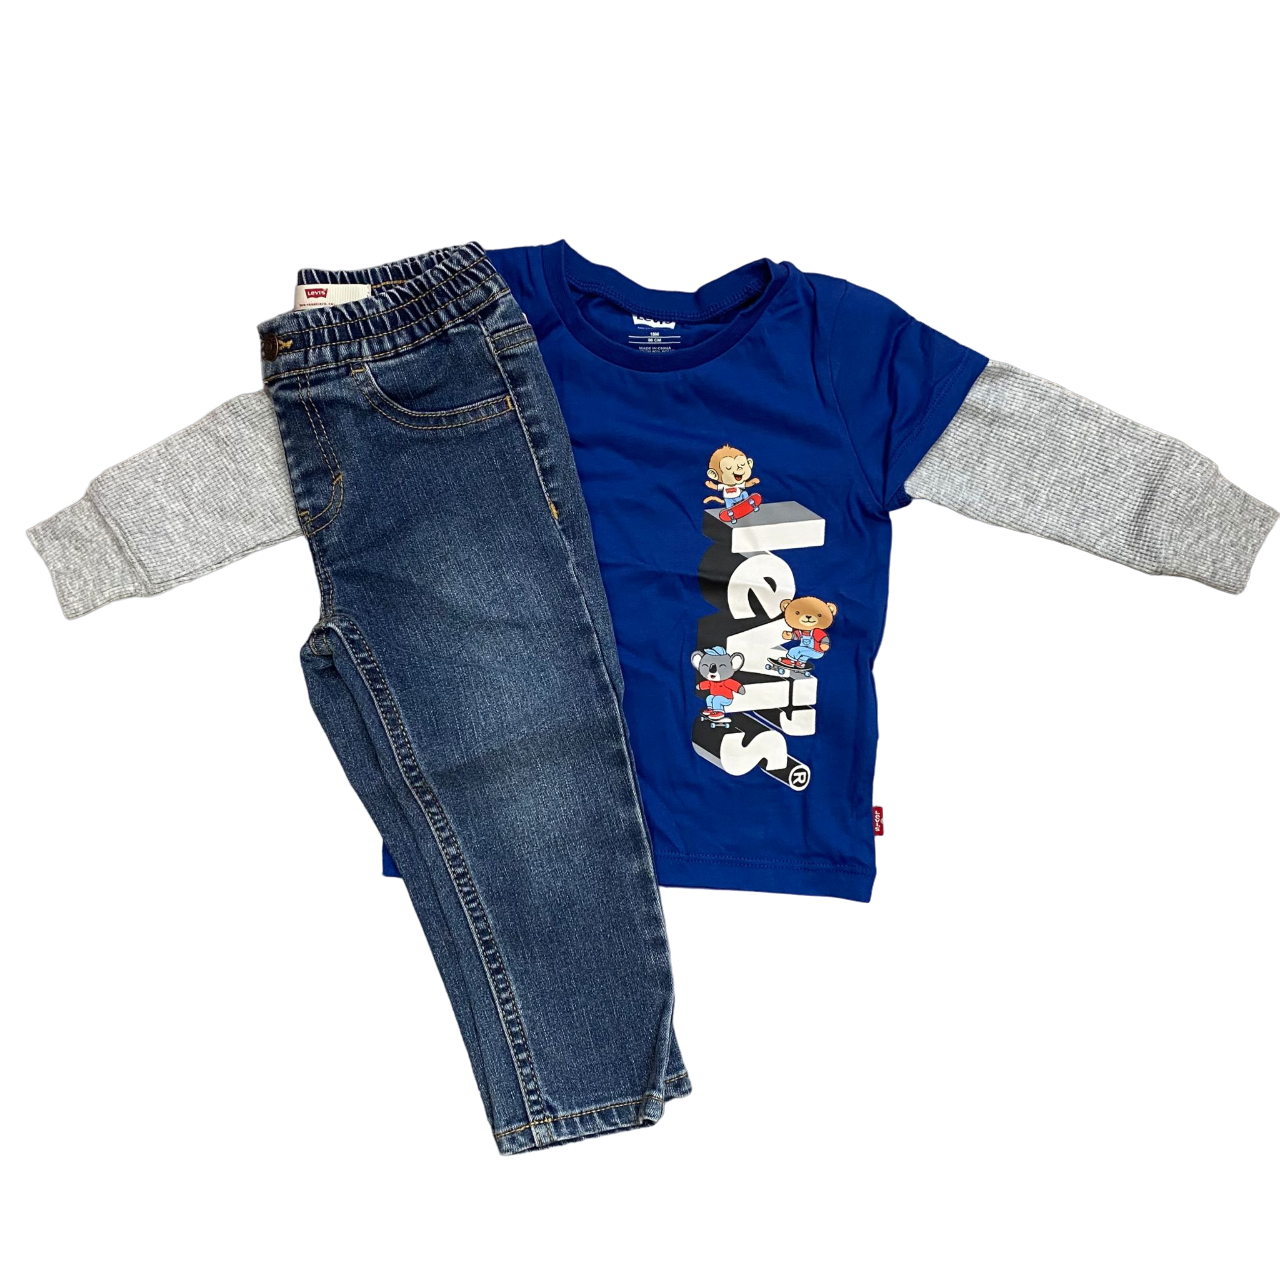 Levi's Kids completo da bambino maglietta manica lunga e pantalone jeans 6EJ099-U85 blu